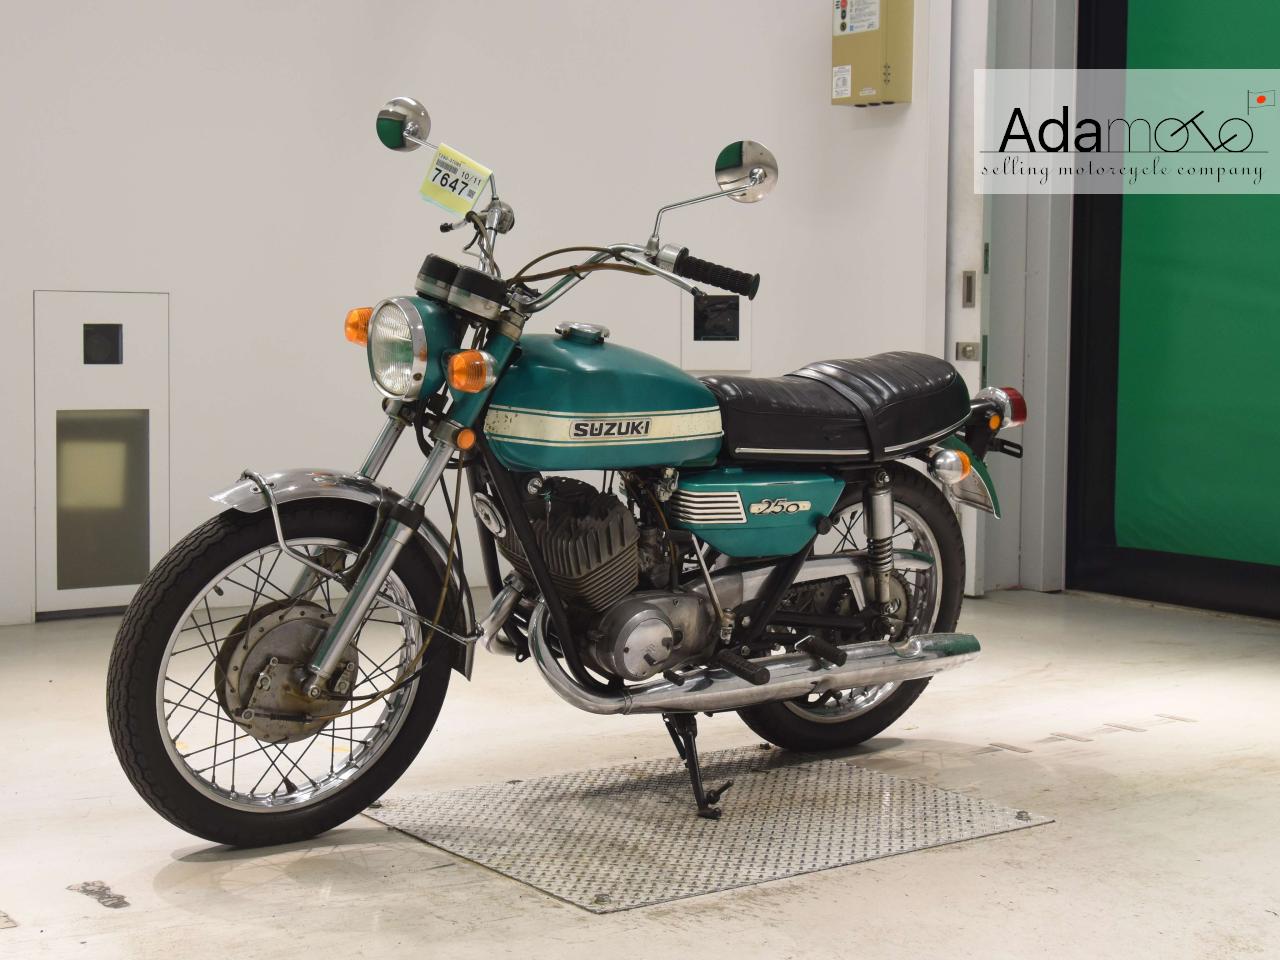 Suzuki T250 - Adamoto - Motorcycles from Japan